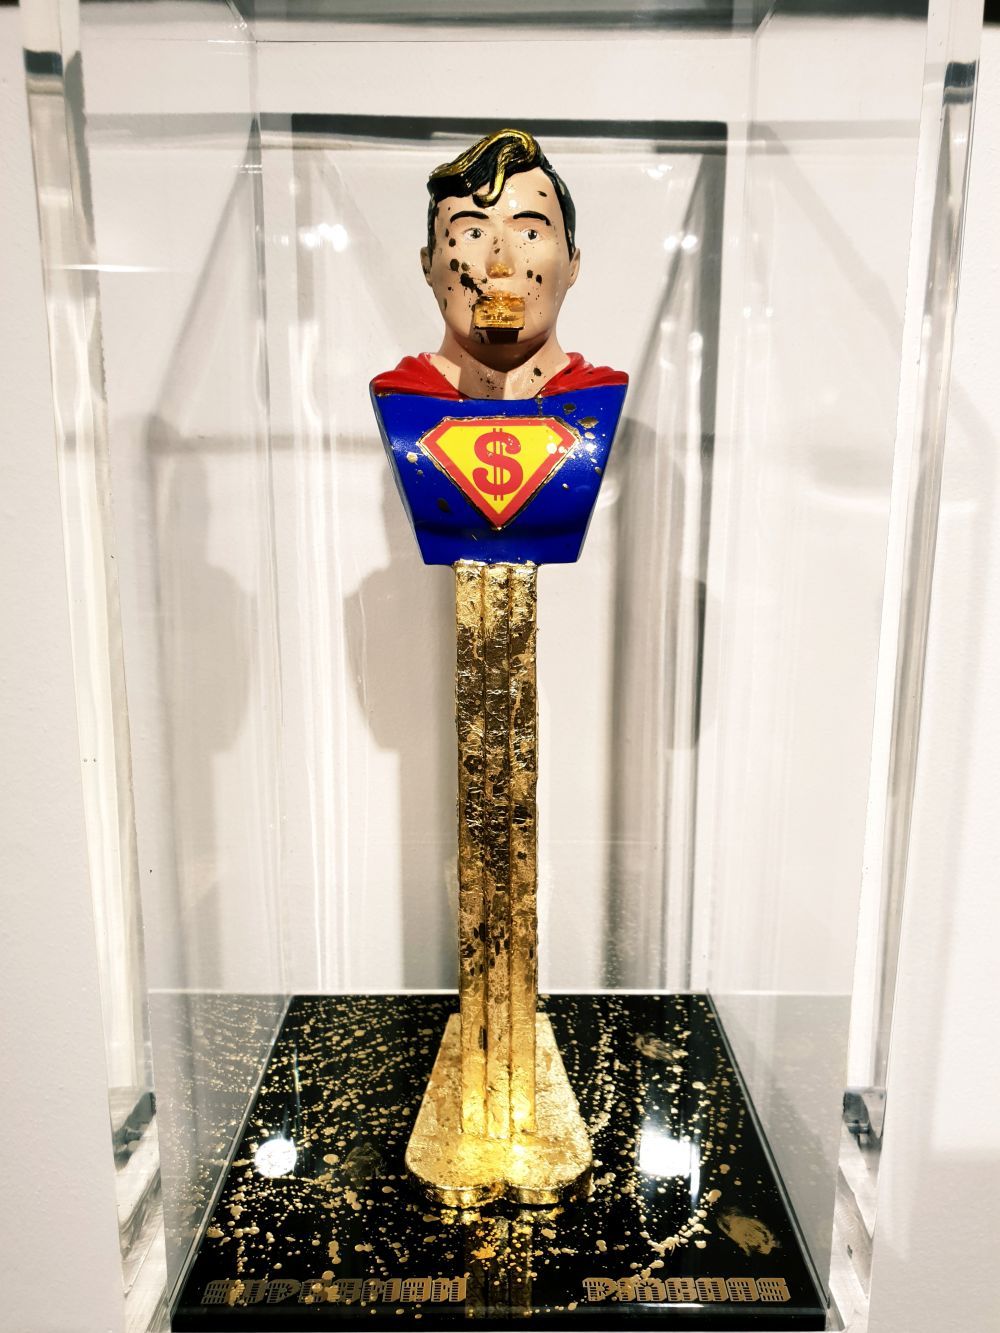 Pinkhas - Superman 平克哈斯--超人



用丙烯颜料强化的树脂雕塑

灵感来自于著名的以神话人物为主题的PEZ糖果，这个树脂作品包含了一个5&hellip;